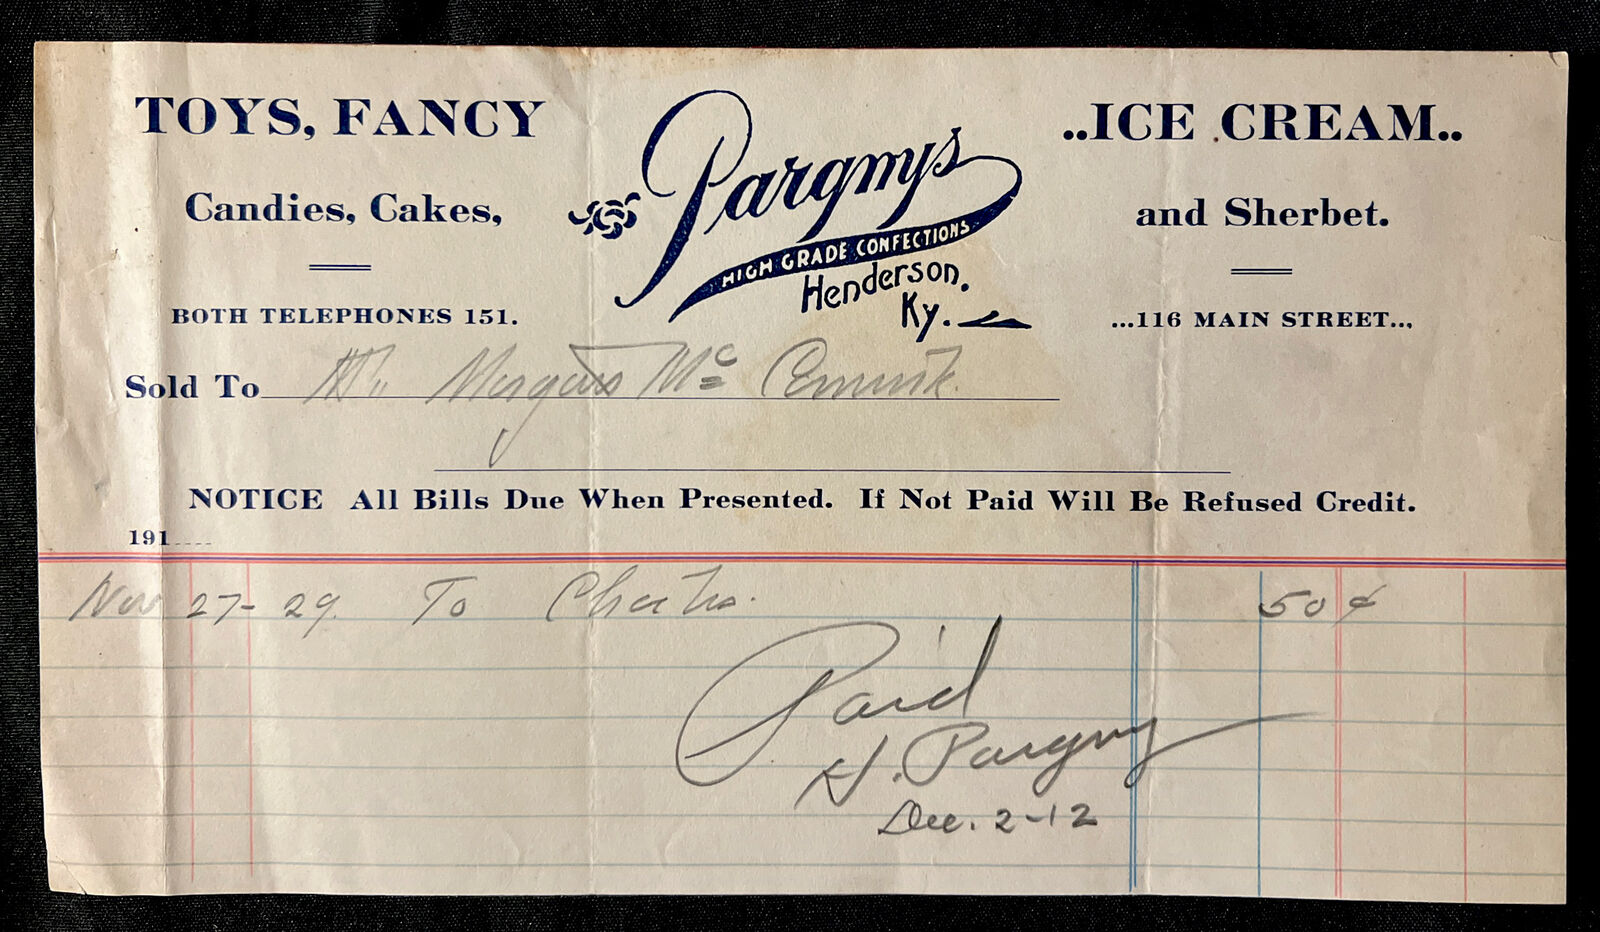 Vtg 1912 PARGNYS Henderson Kentucky ICE CREAM Cakes CANDY Fancy TOYS Bill Head